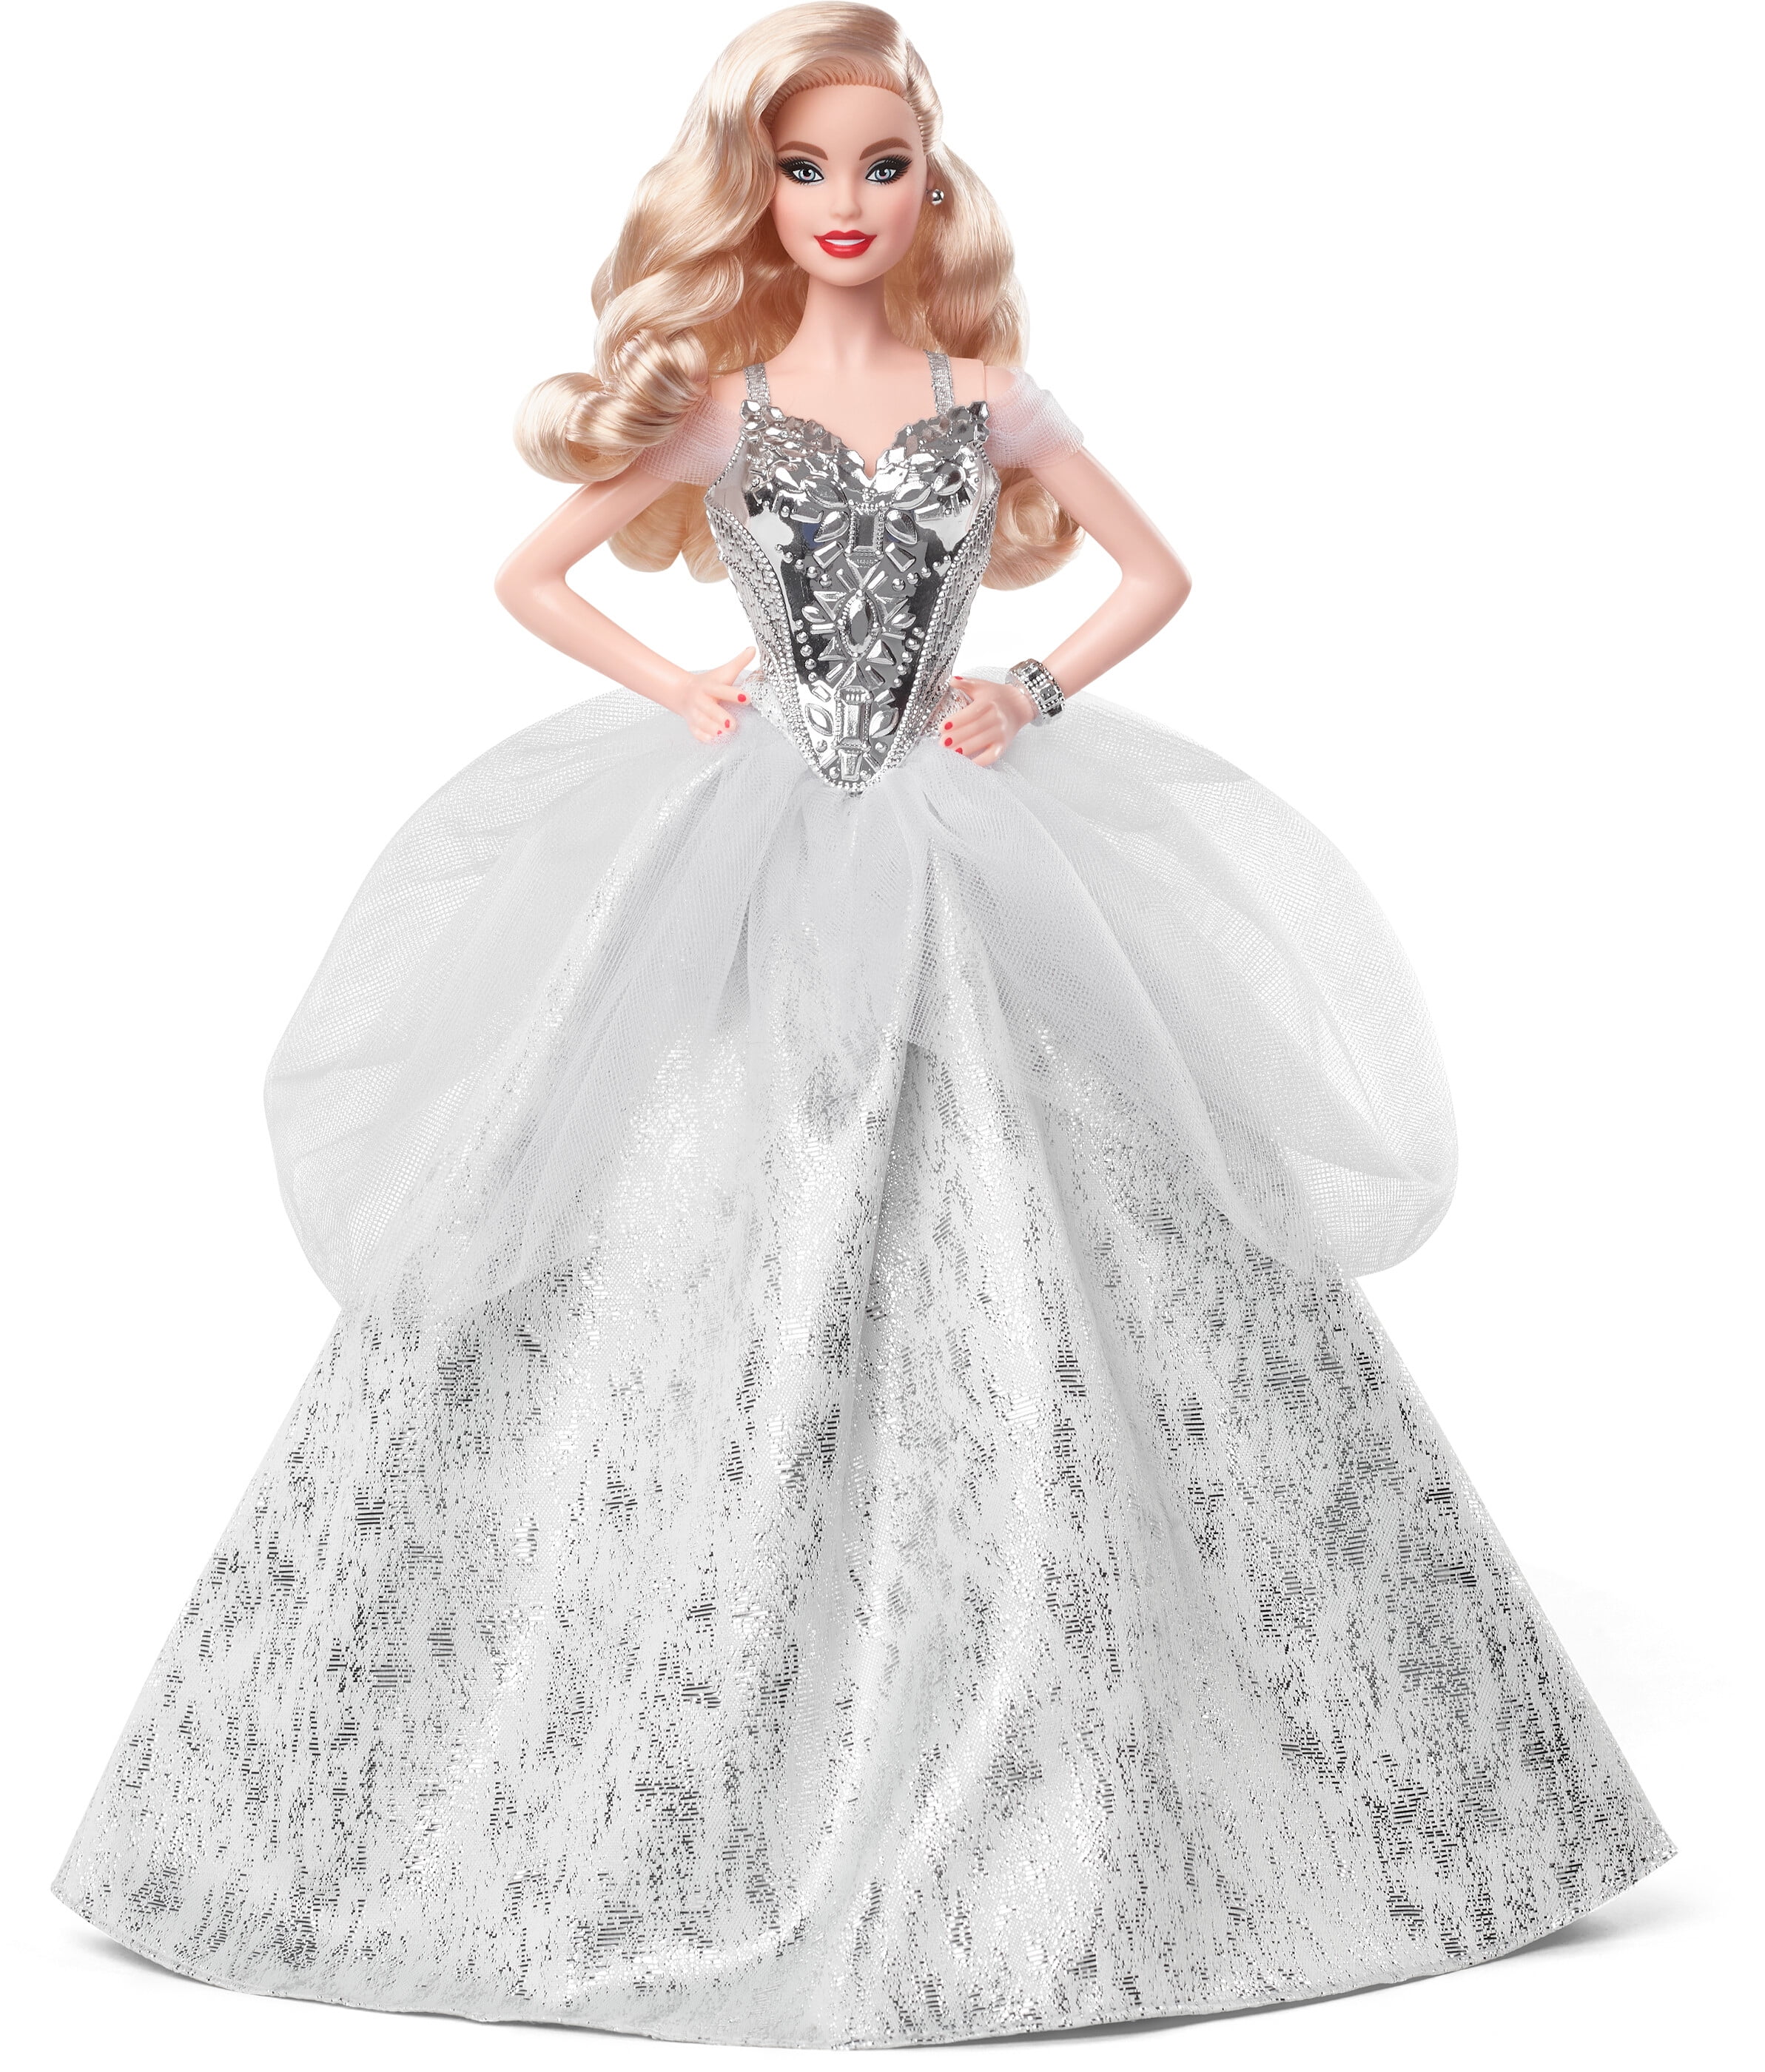 Sofia Fashion Show Barbie Doll – Snooplay